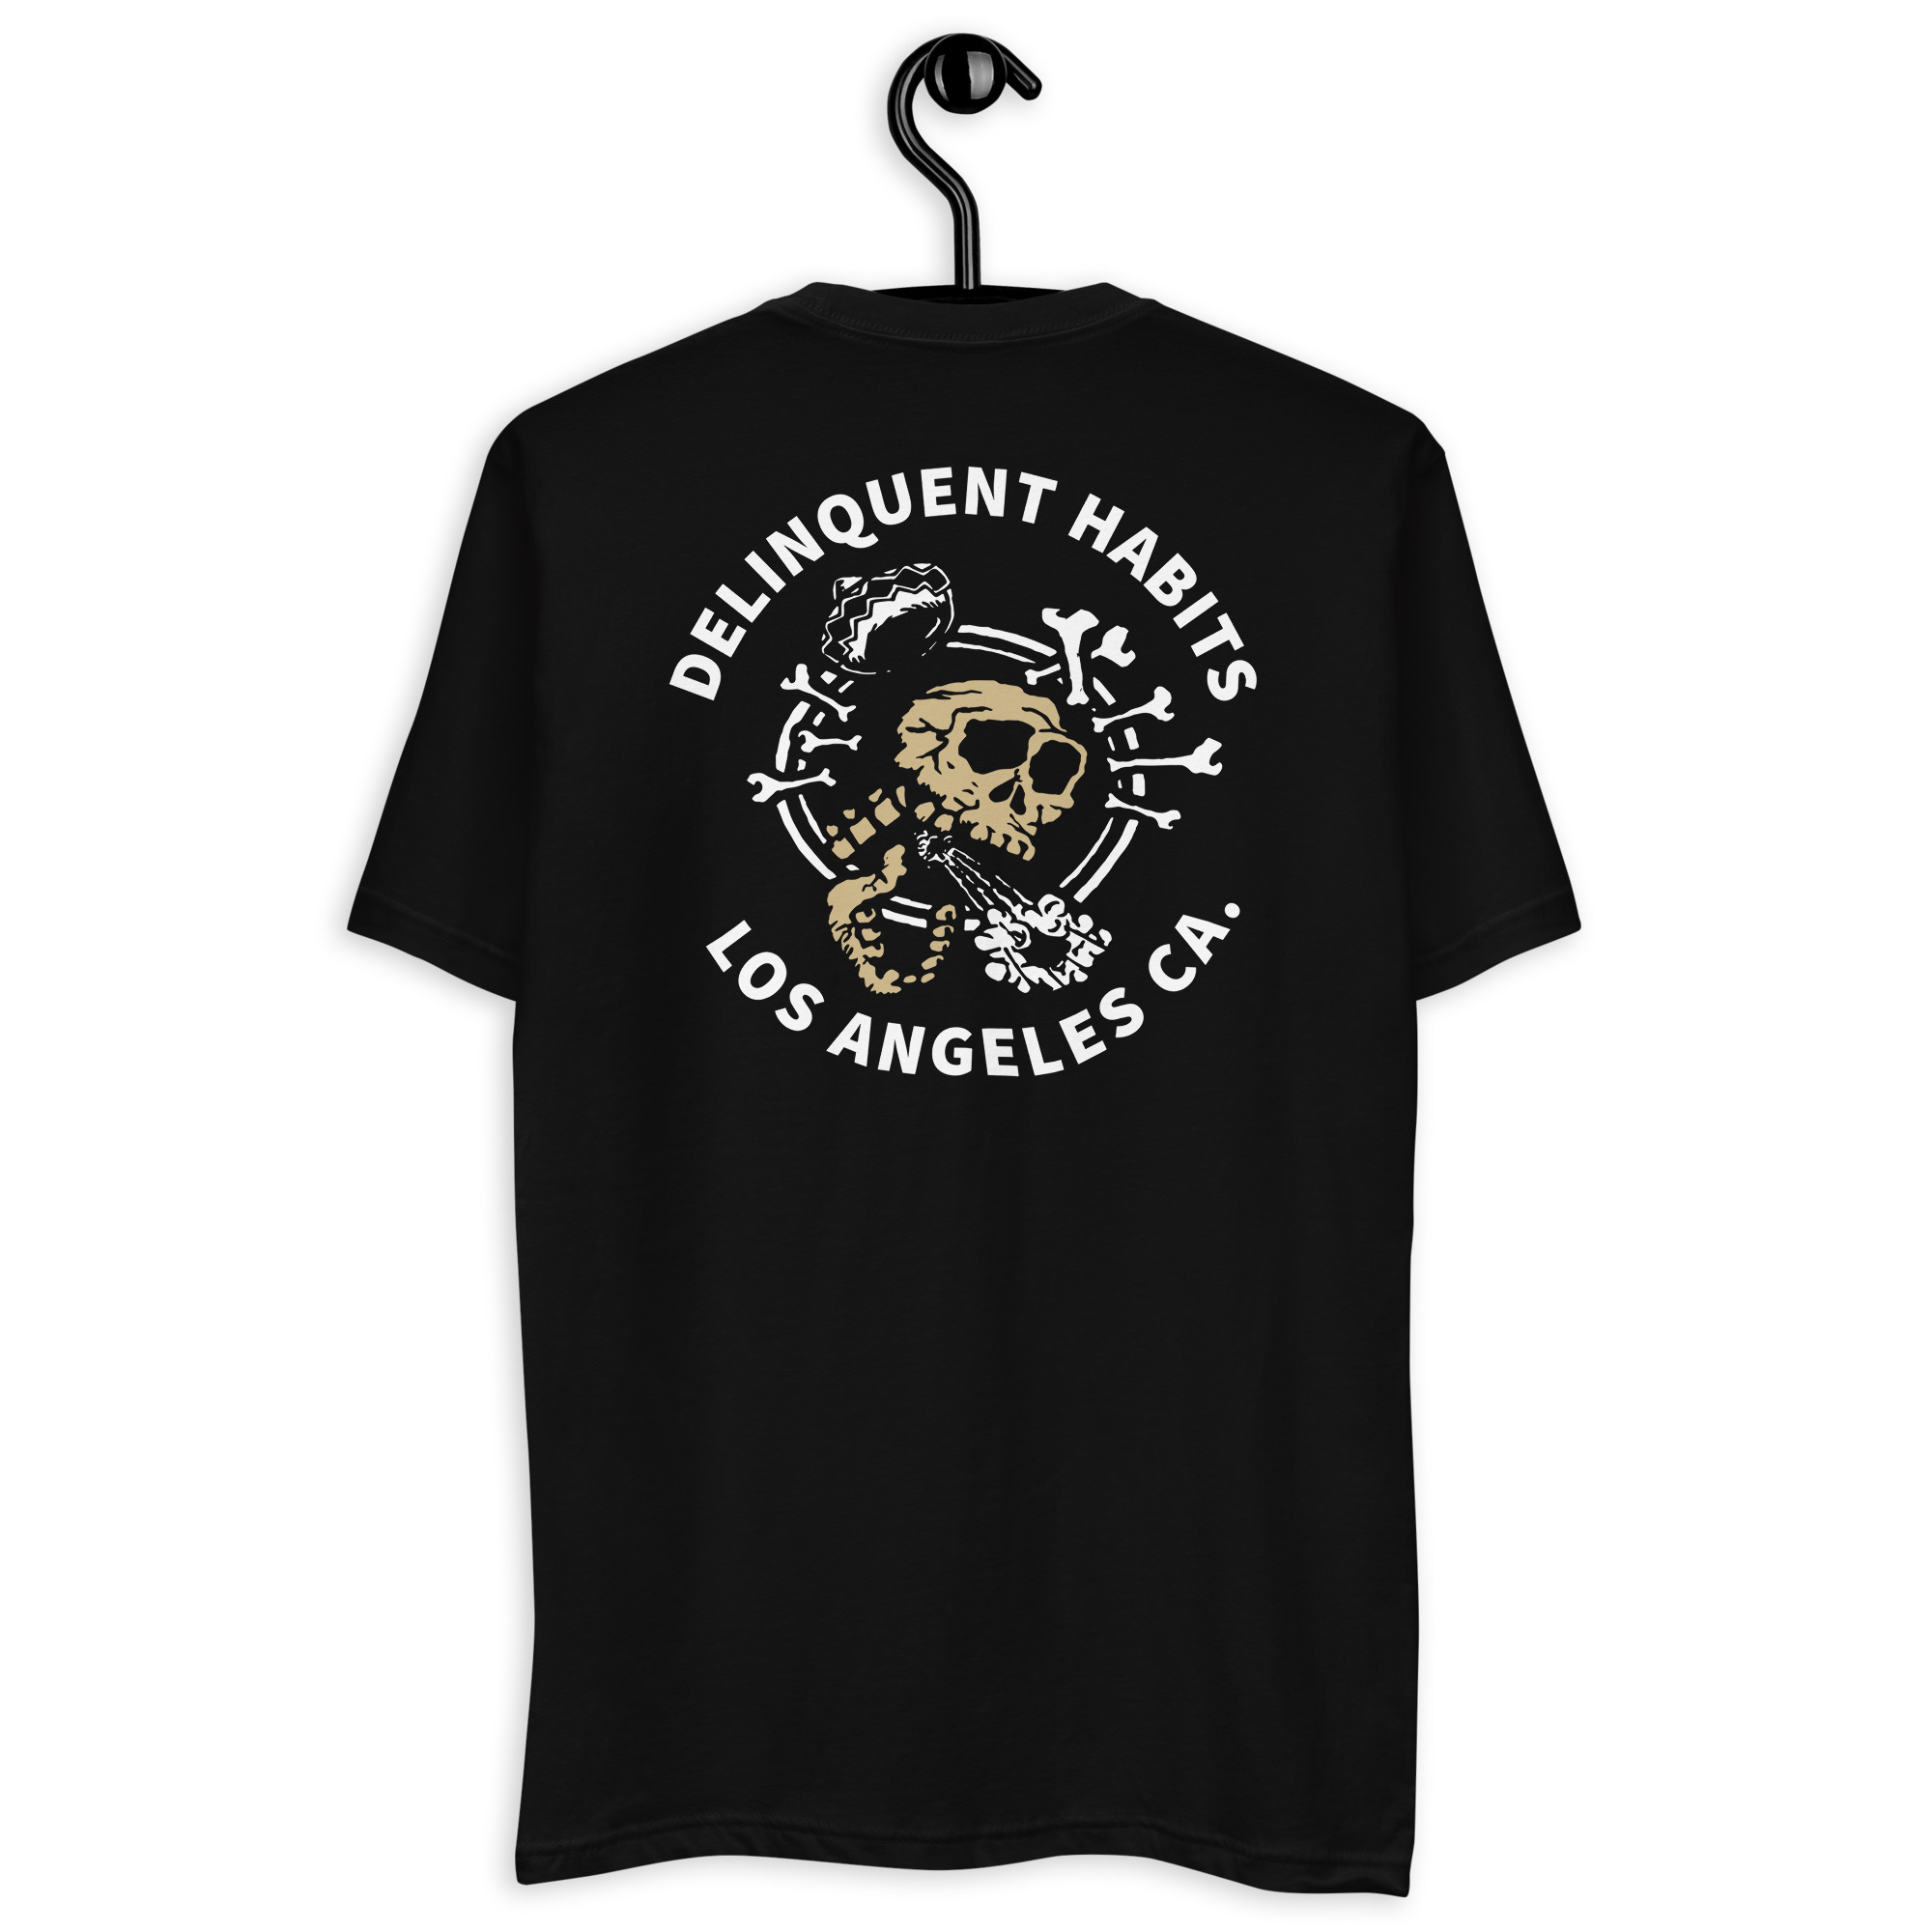 DH Skull Logo - Gold - Short Sleeve T-shirt